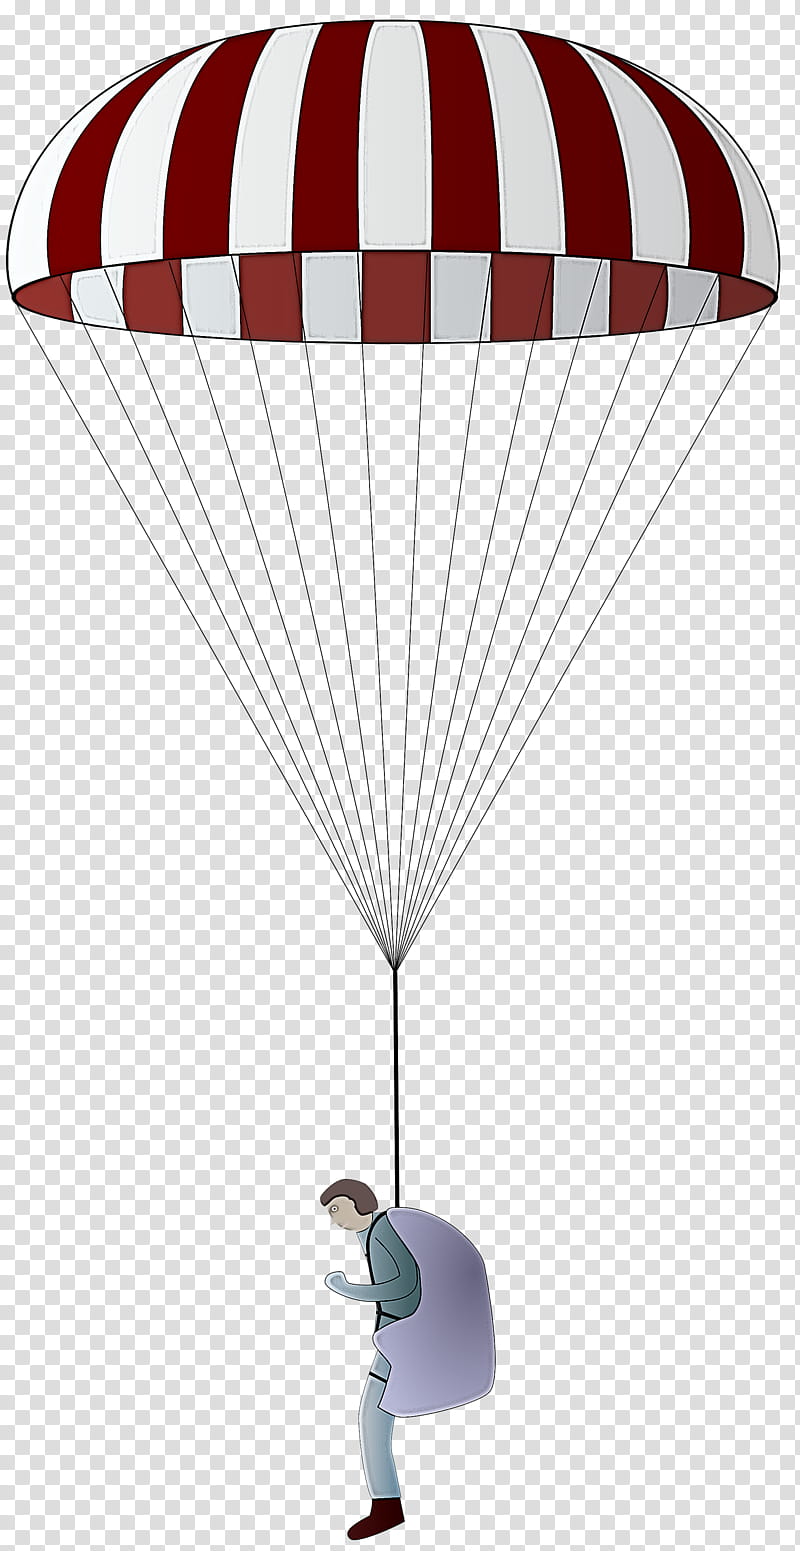 Hot air balloon, Parachute, Air Sports, Sports Equipment, Parachuting, Paratrooper transparent background PNG clipart